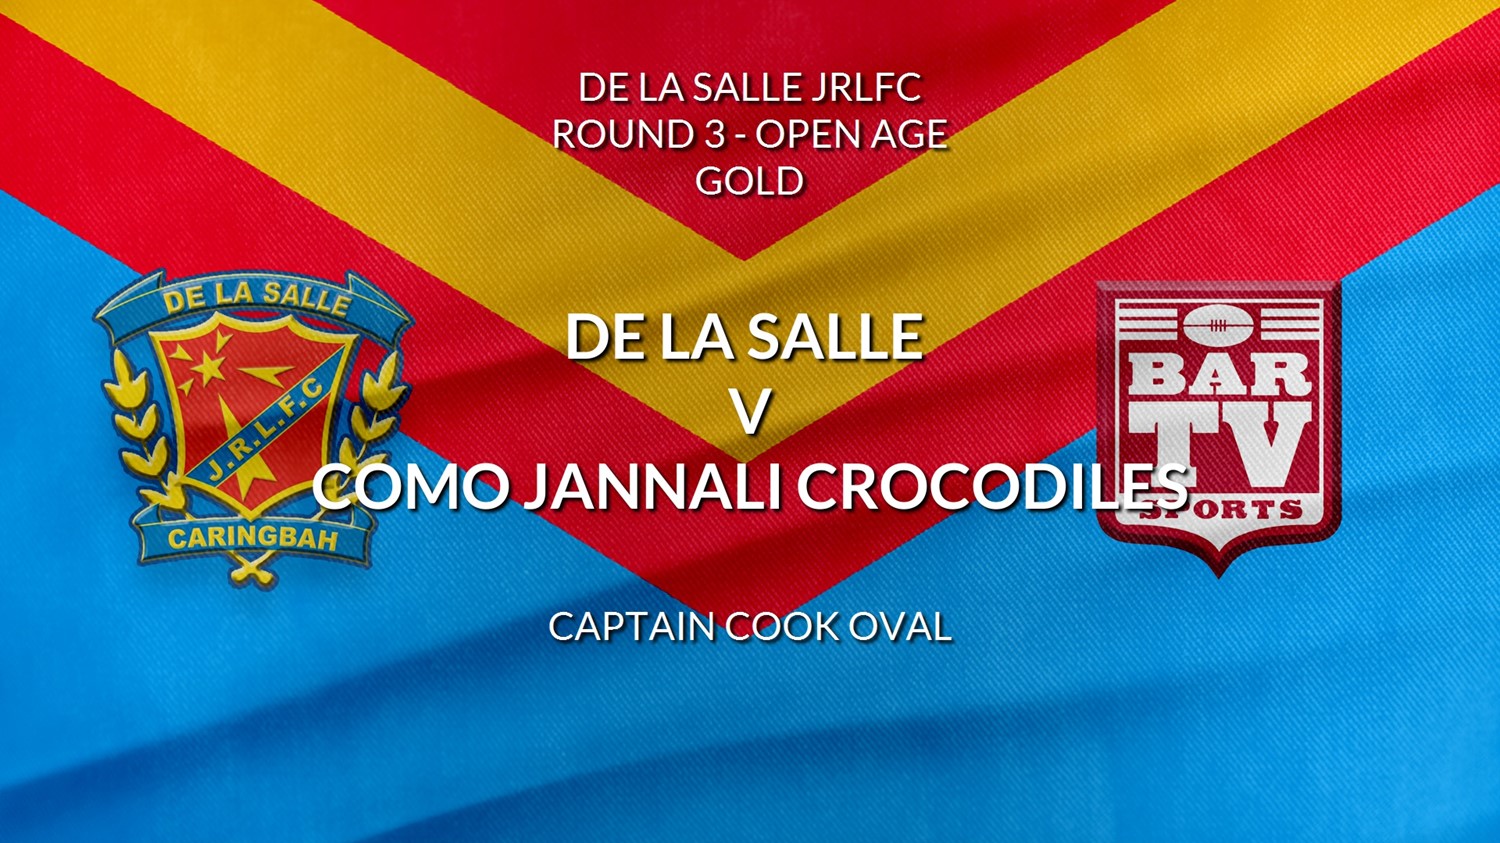 De La Salle Round 3 - Open Age Gold - De La Salle v Como Jannali Crocodiles Slate Image